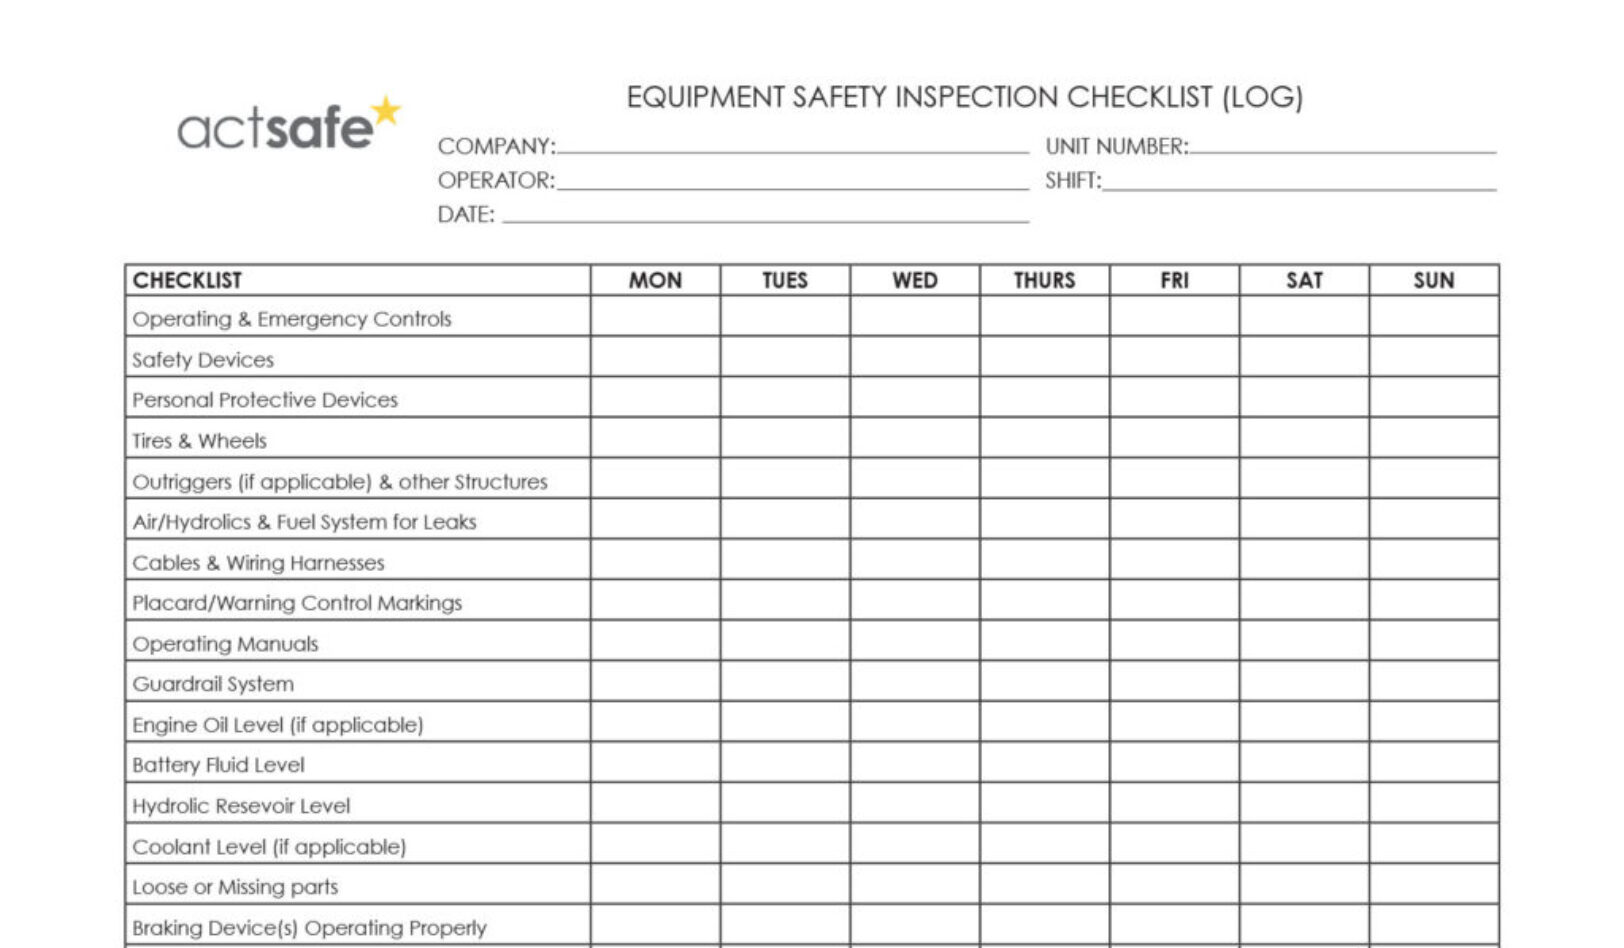 Equipment Safety Inspection Log – Checklist